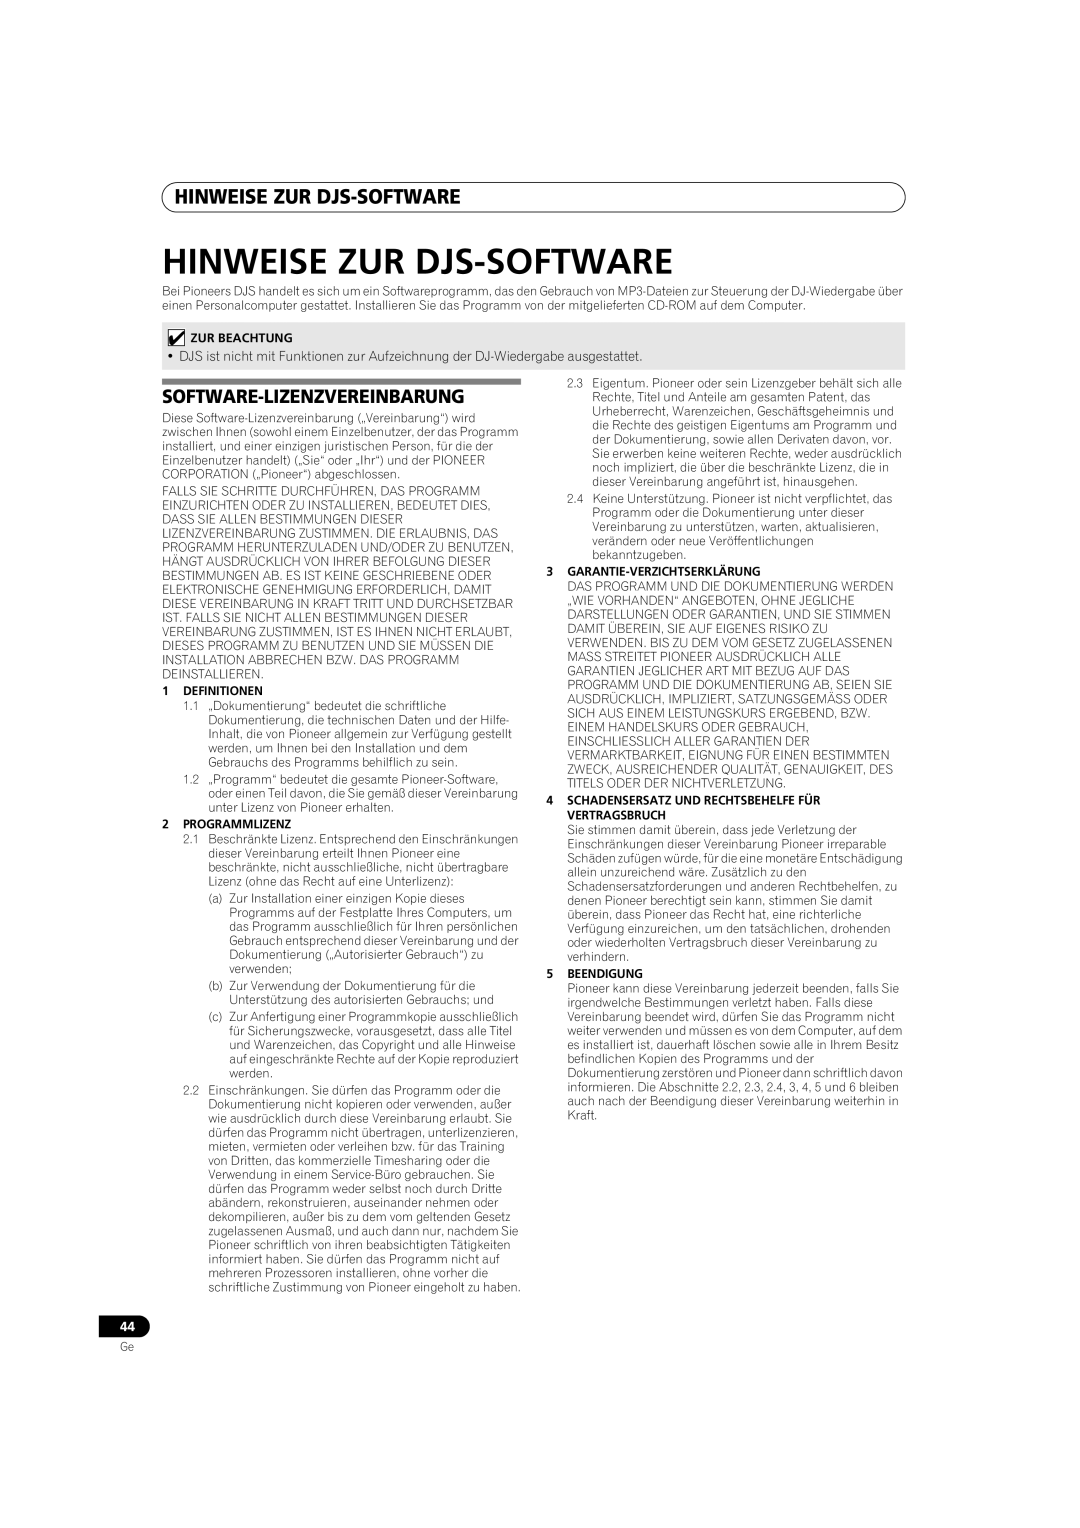 Pioneer MEP-7000 operating instructions Hinweise Zur Djs-Software, Software-Lizenzvereinbarung 